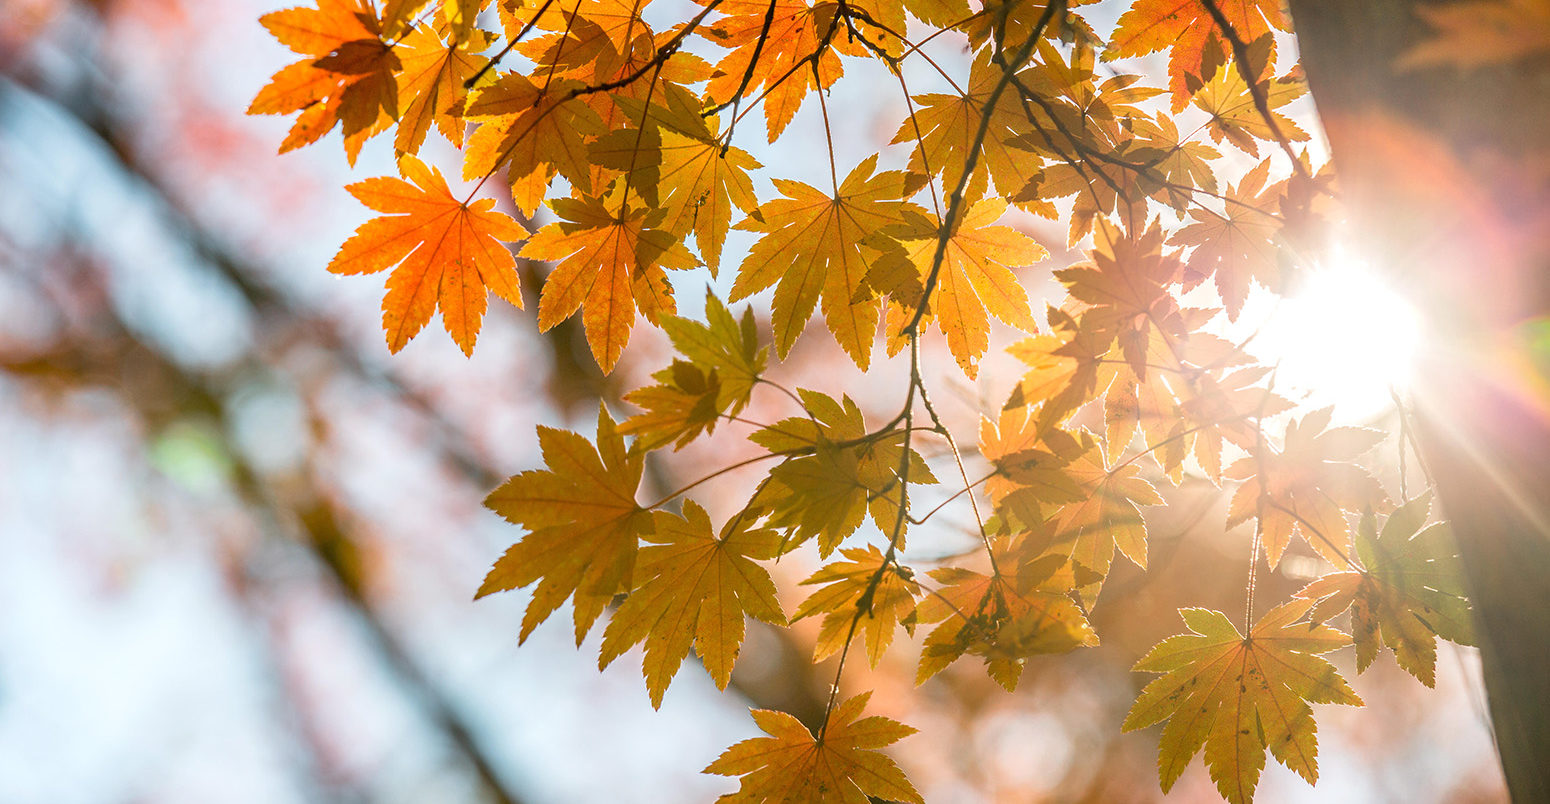 Autumn leaves. Credit: Vichaya Kiatying-Angsulee / Alamy Stock Photo. G8MN0T